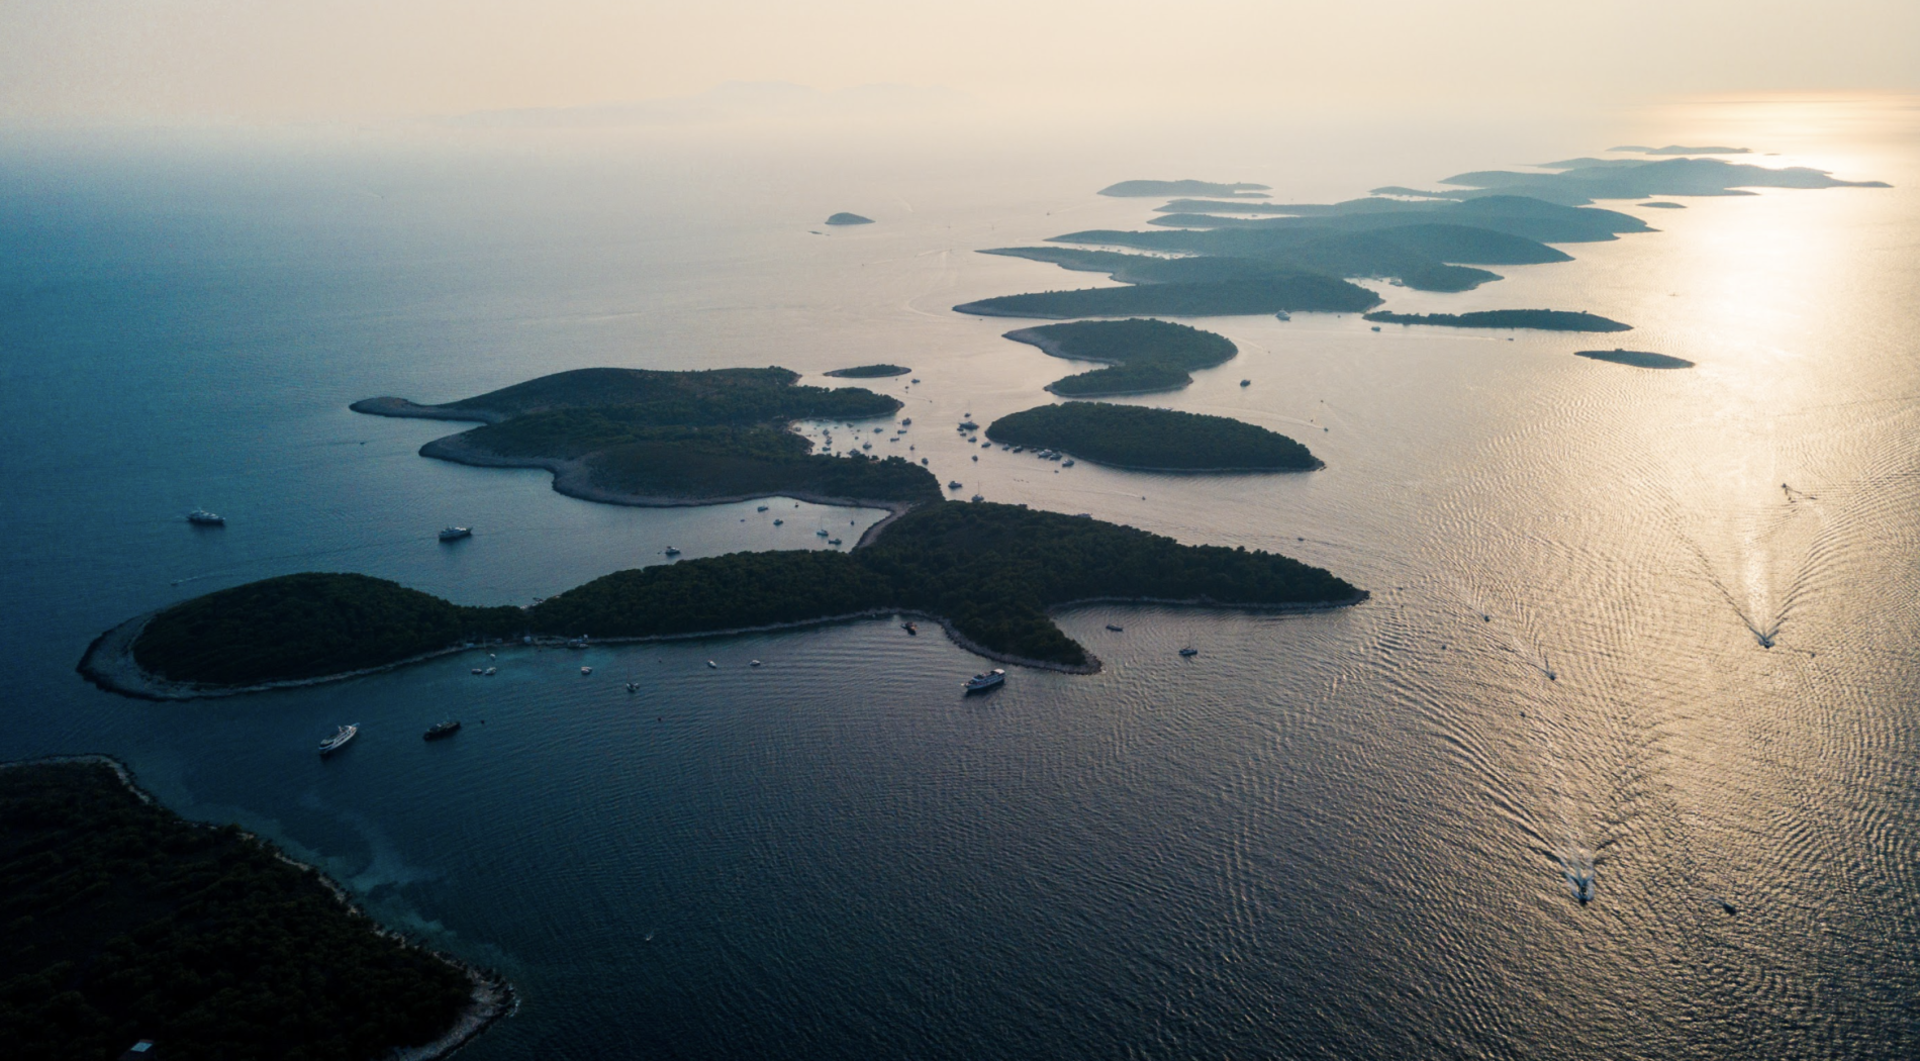 Hvar Island